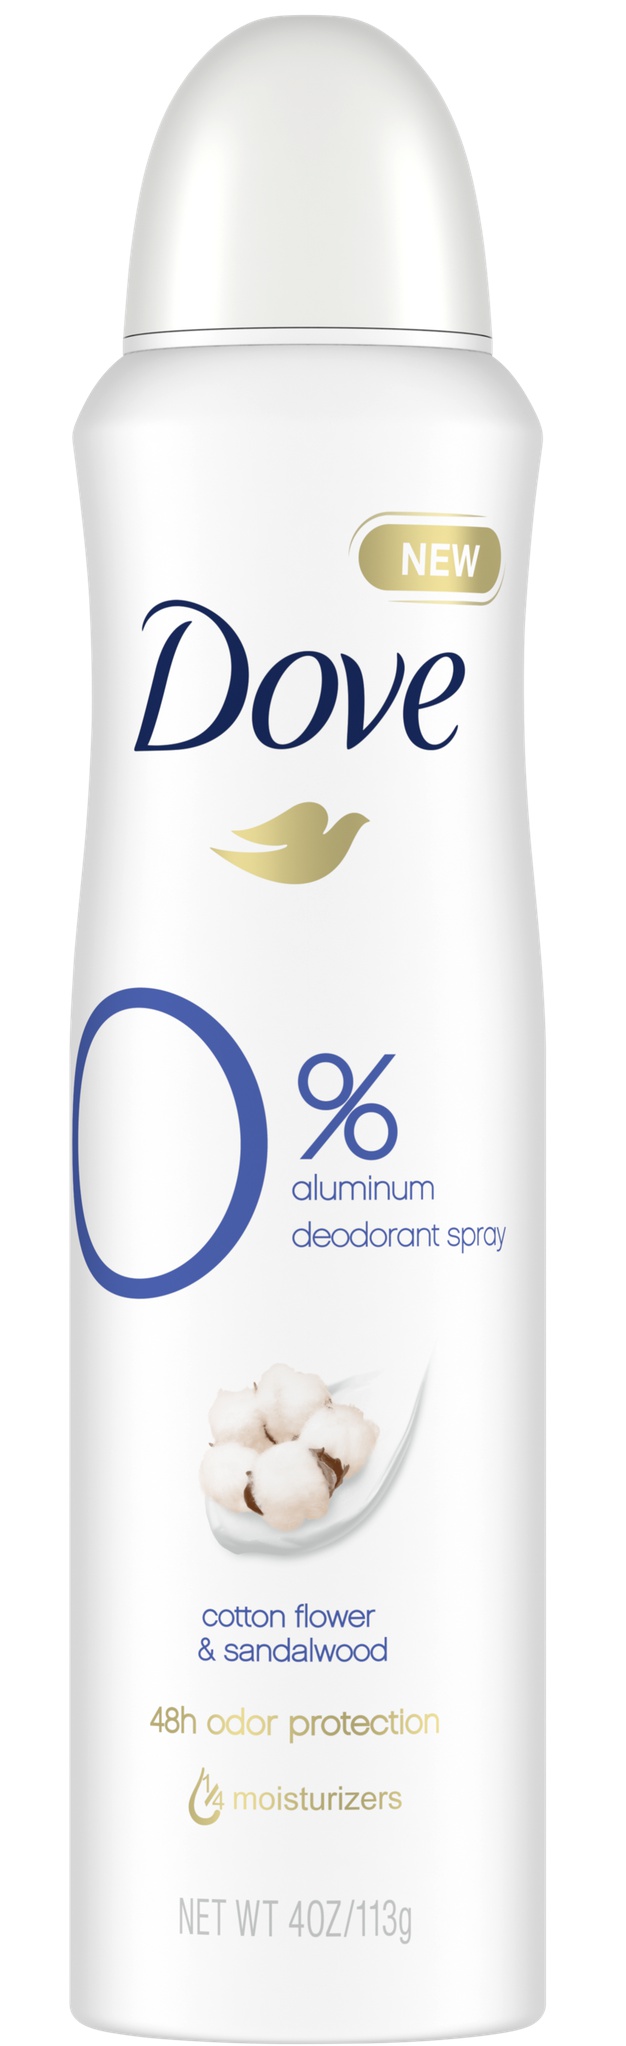 Dove 0% Aluminum Ddeodorant Spray Cotton Flower & Sandalwood